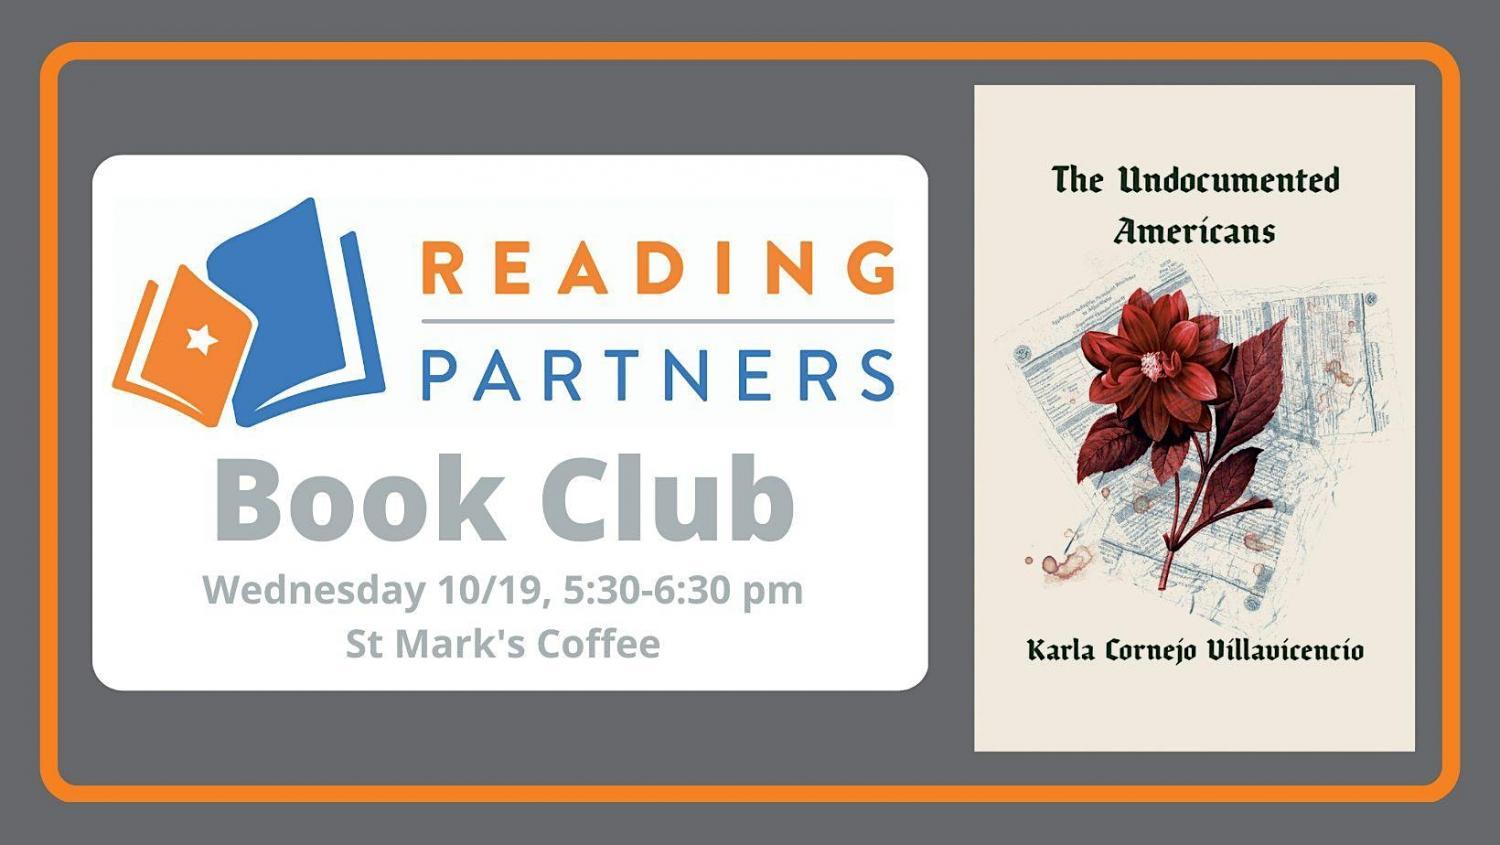 Reading Partners Book Club- October
Fri Oct 14, 10:00 AM - Fri Oct 14, 11:00 AM